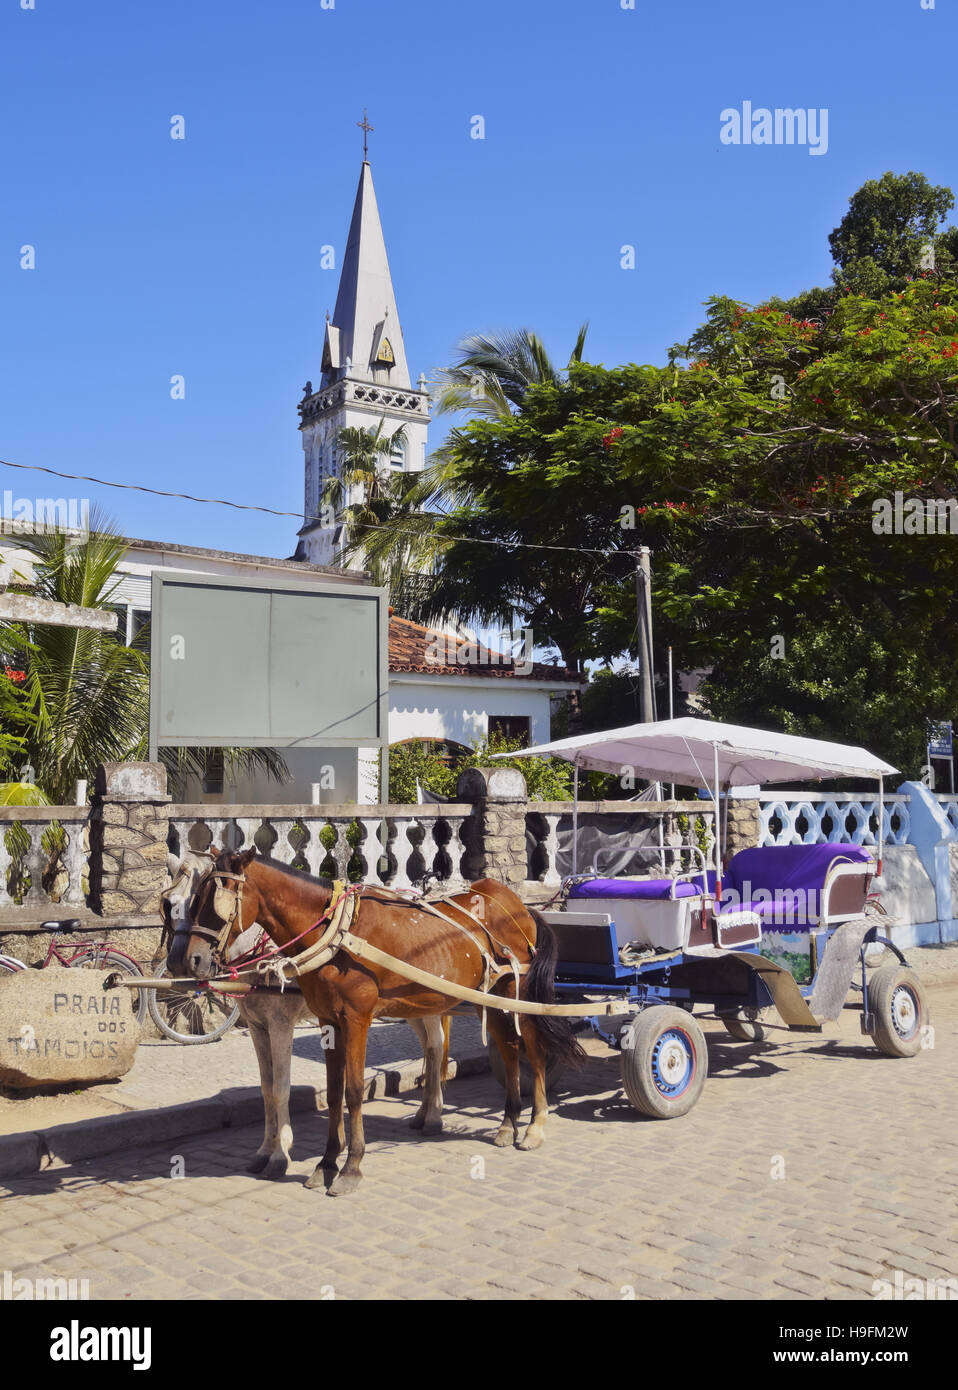 Brazil, State of Rio de Janeiro, Guanabara Bay, Paqueta Island, Horse carriage in front of the Bom Jesus do Monte Church. Stock Photo